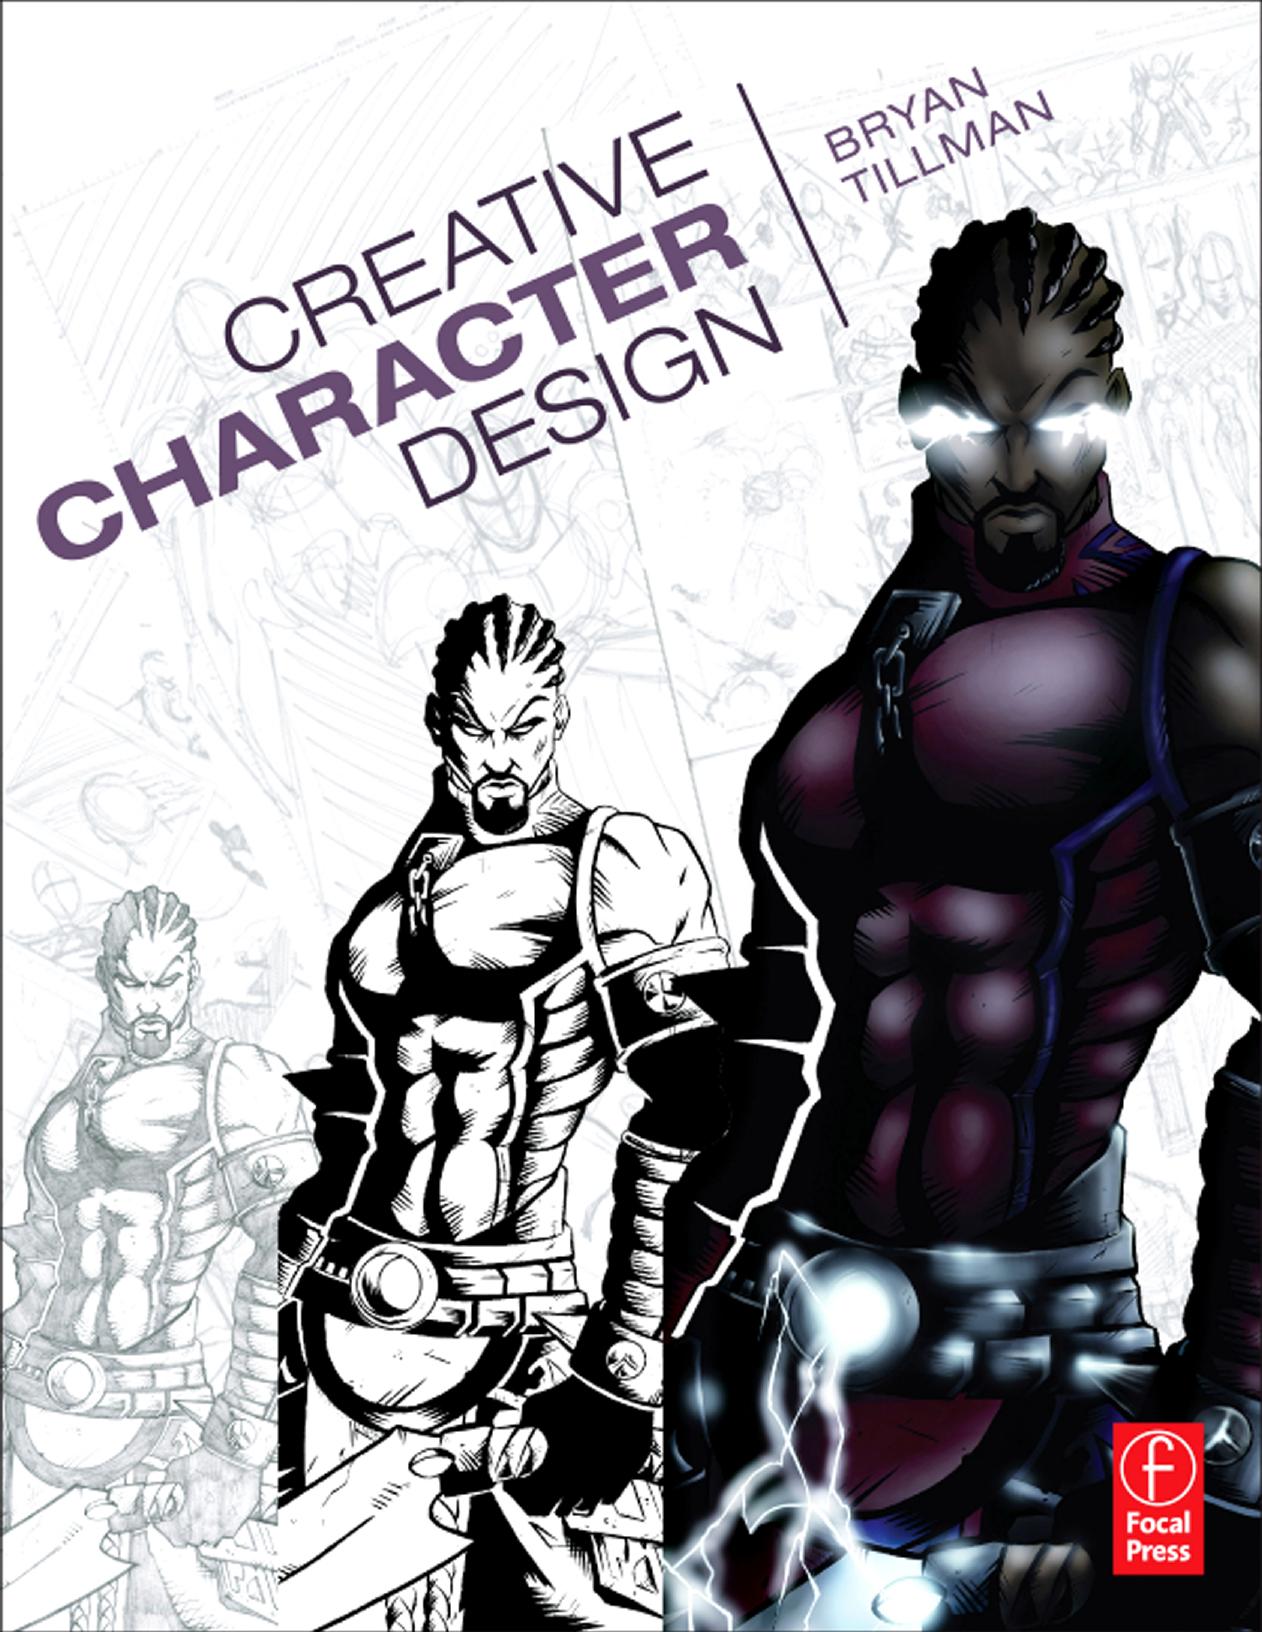 Creative Character Design by Bryan Tillman